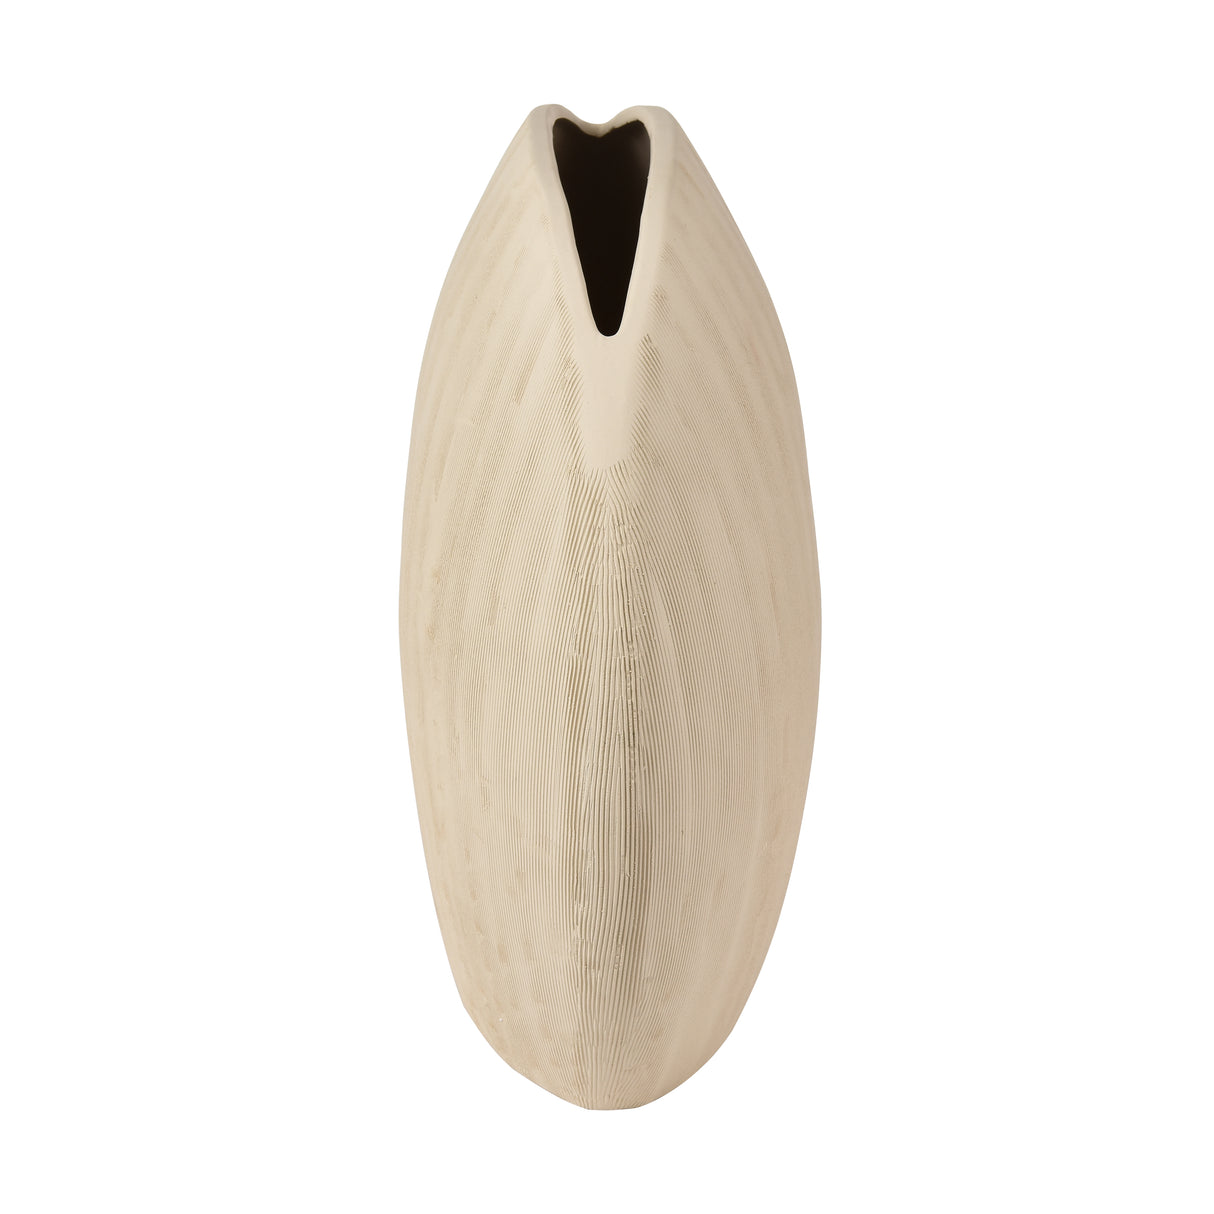 Elk H0017-10889 Nickey Vase - Small Cream